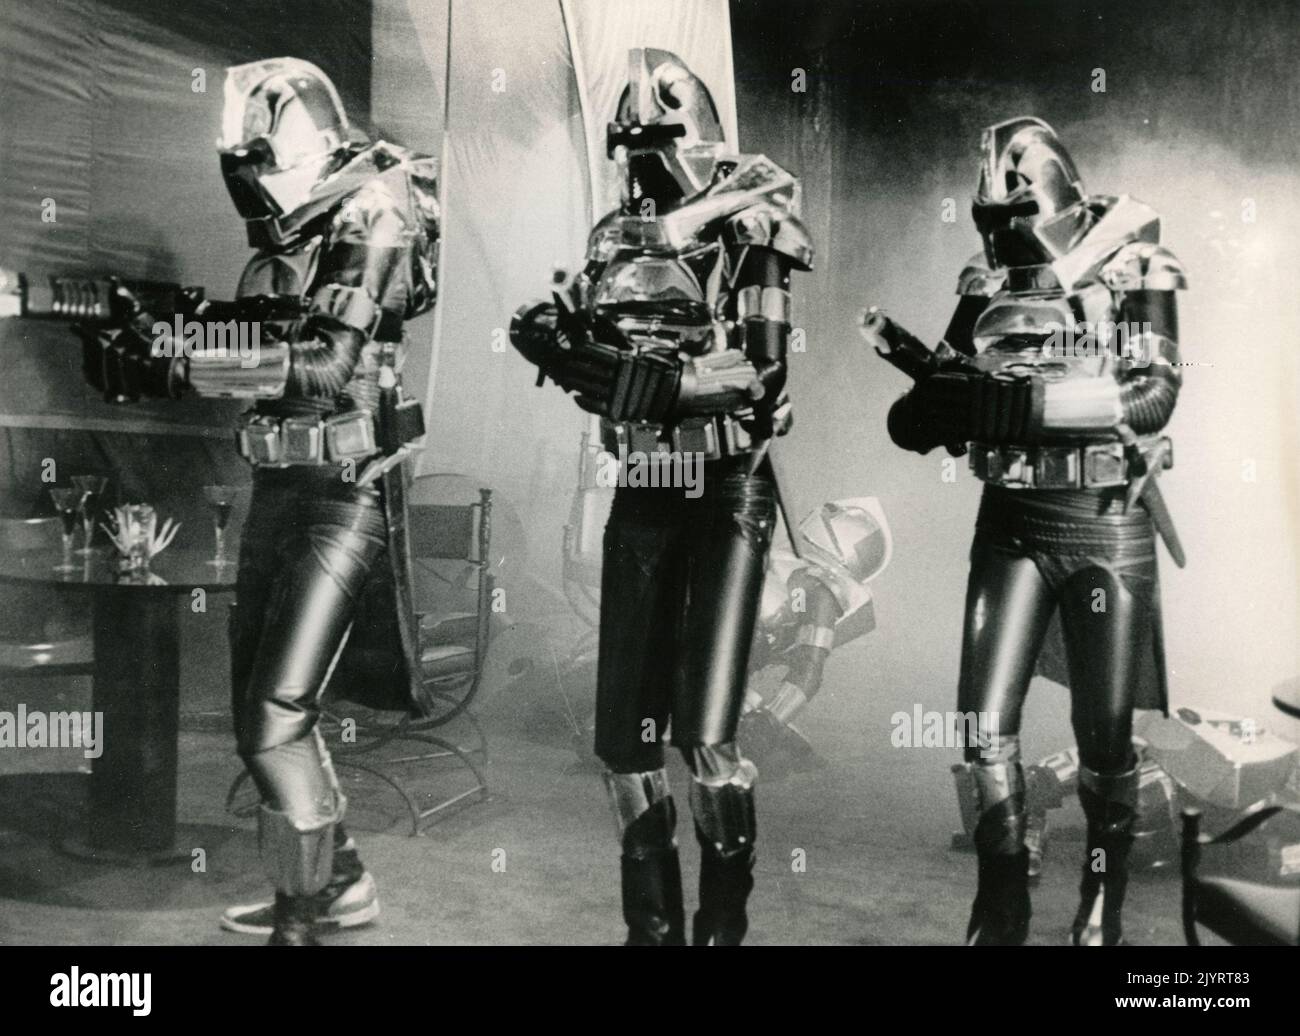 Scena dal film di fantascienza Battlestar Galactica, Saga of the Star World, USA 1978 Foto Stock